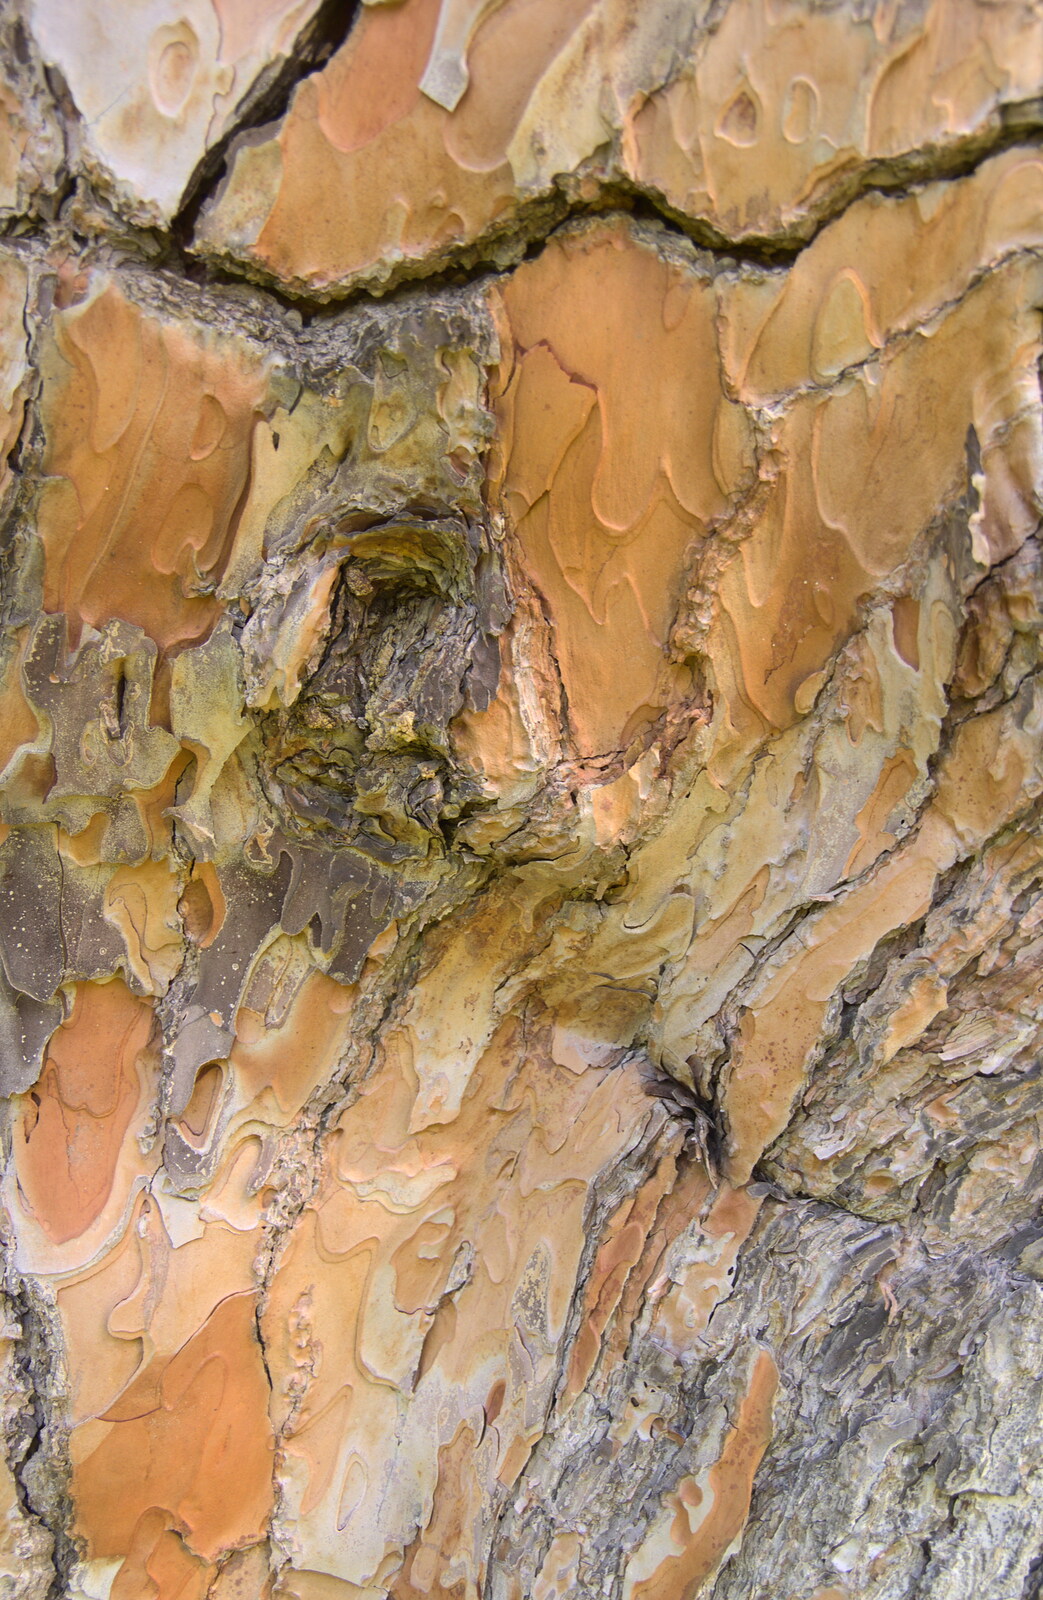 Interesting bark that looks more like stone from Barcelona and Parc Montjuïc, Catalonia, Spain - 21st October 2017